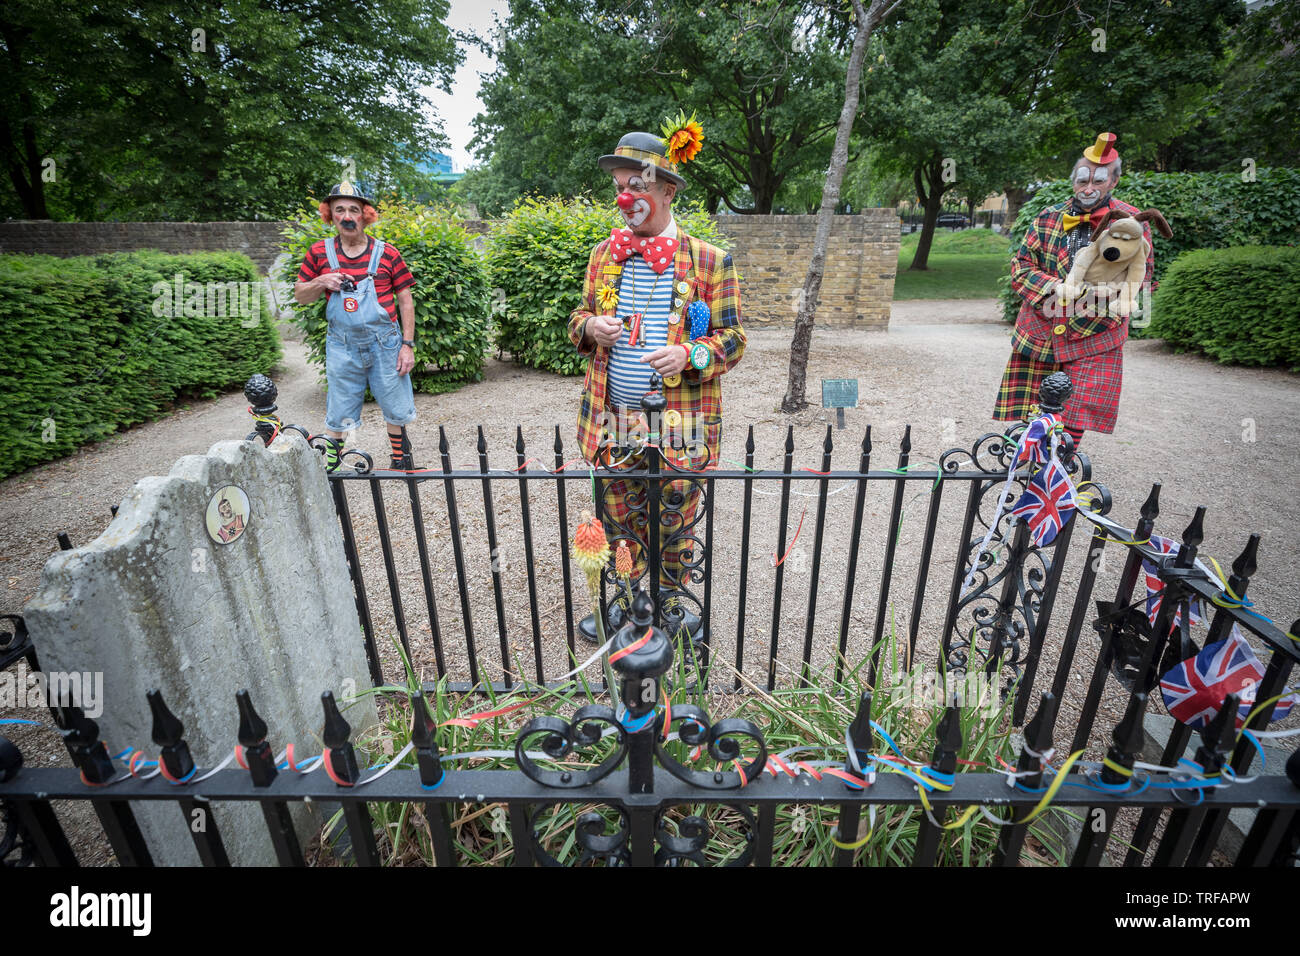 Annual Joseph Grimaldi Clown Memorial Day gathering at his grave in north London, UK. Stock Photo